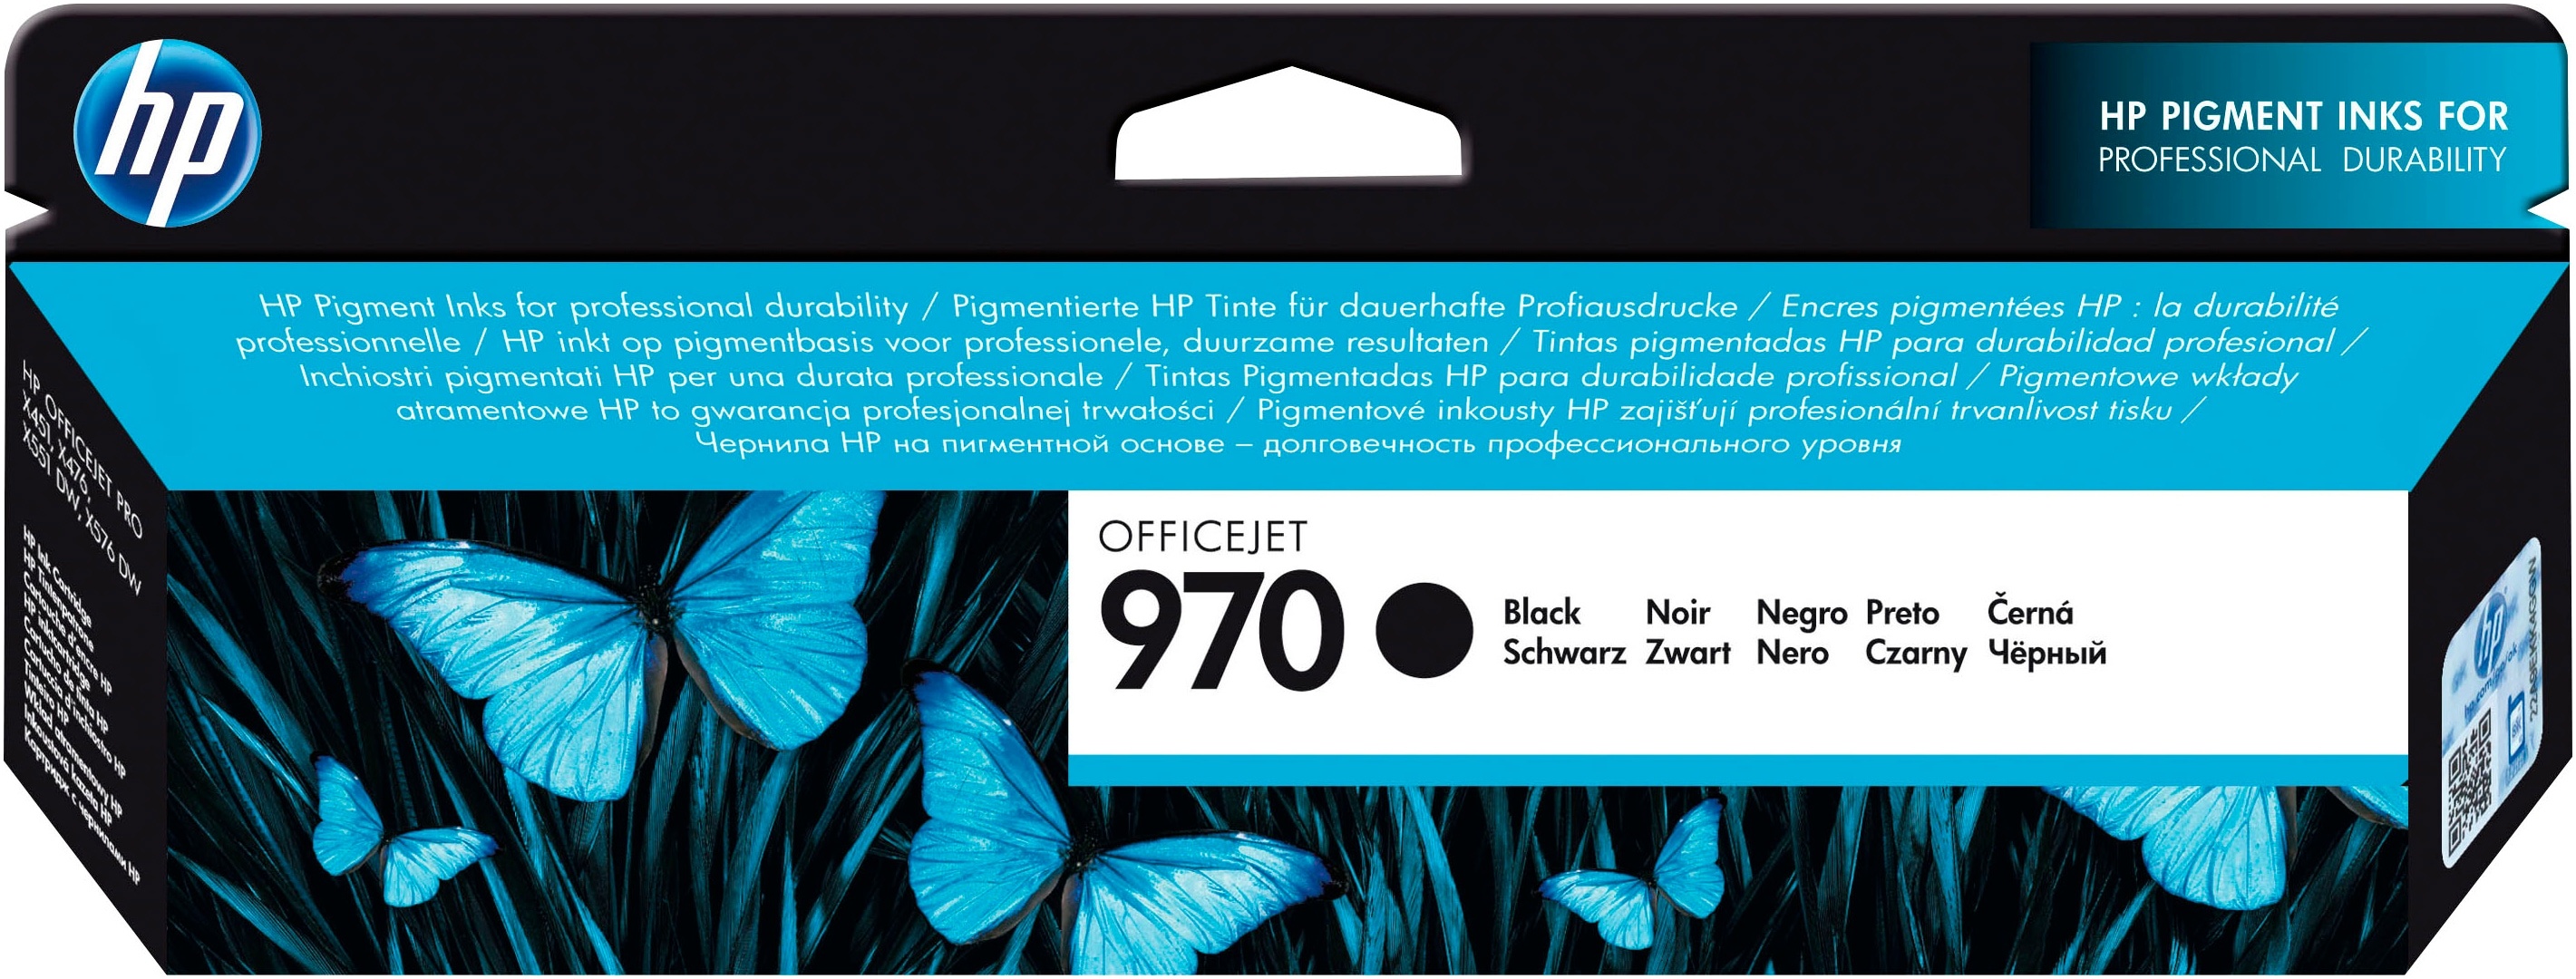 HP Tintenpatrone »970« HP schwarz